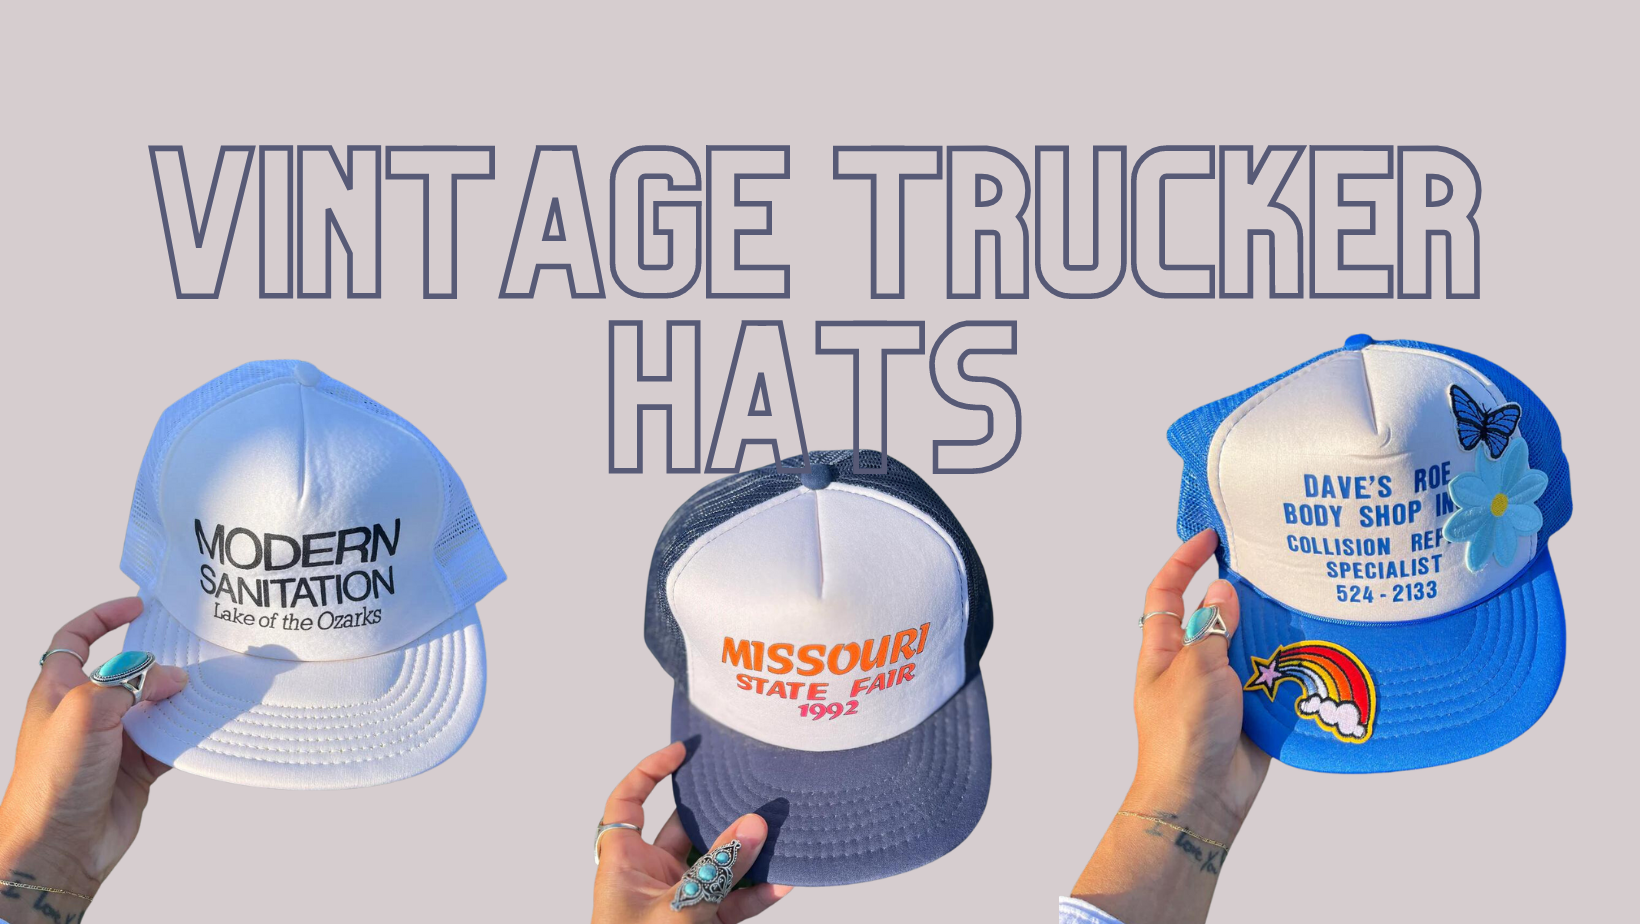 files/Vintage_Trucker_hats_2.png